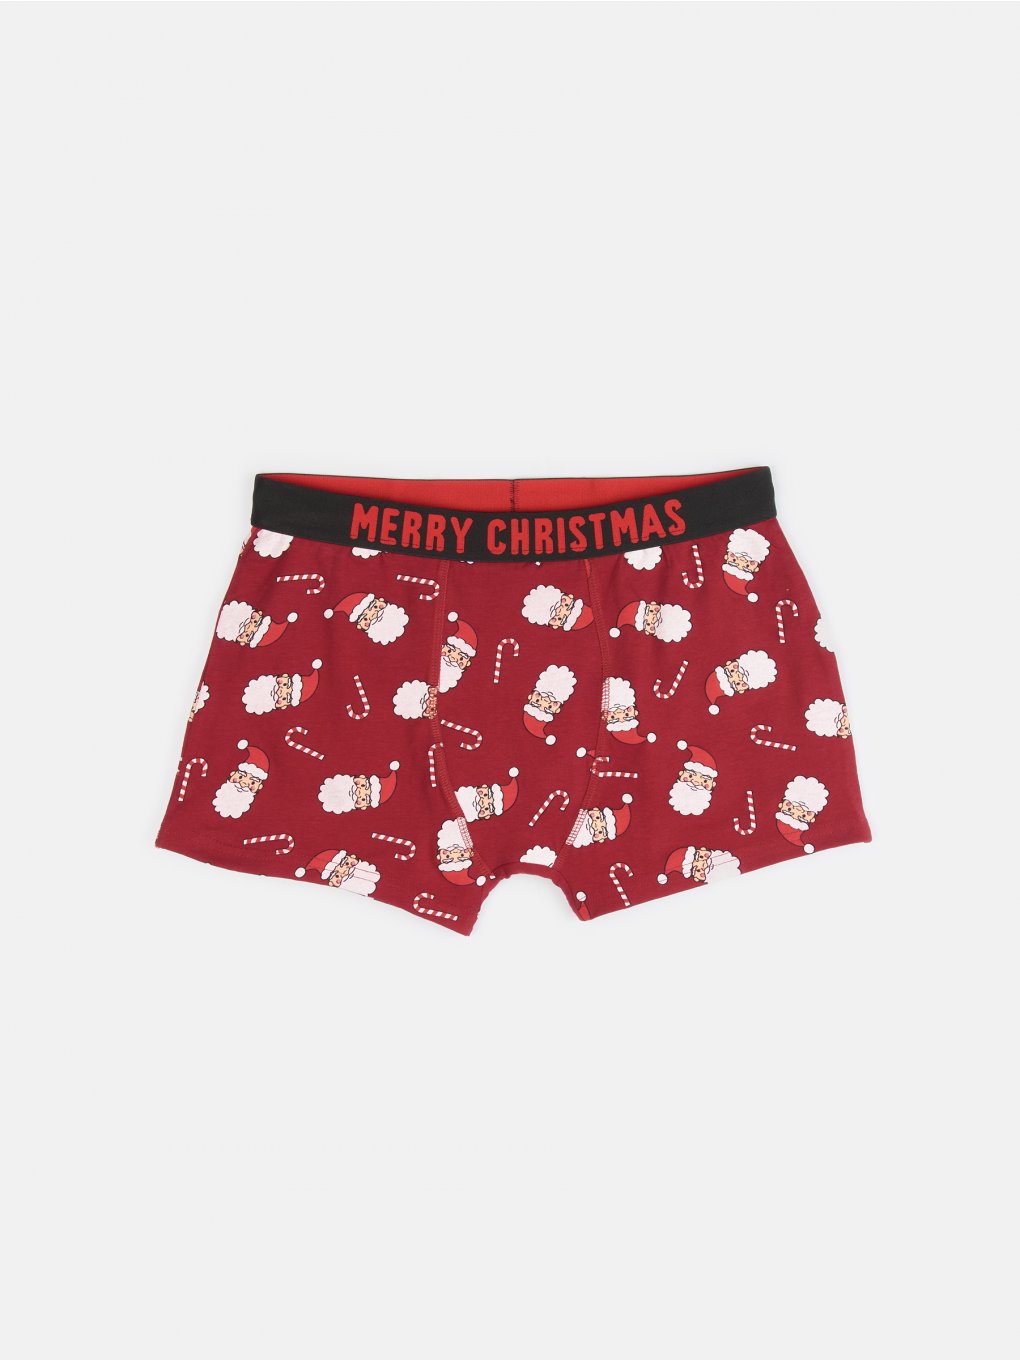 Christmas cotton boxers